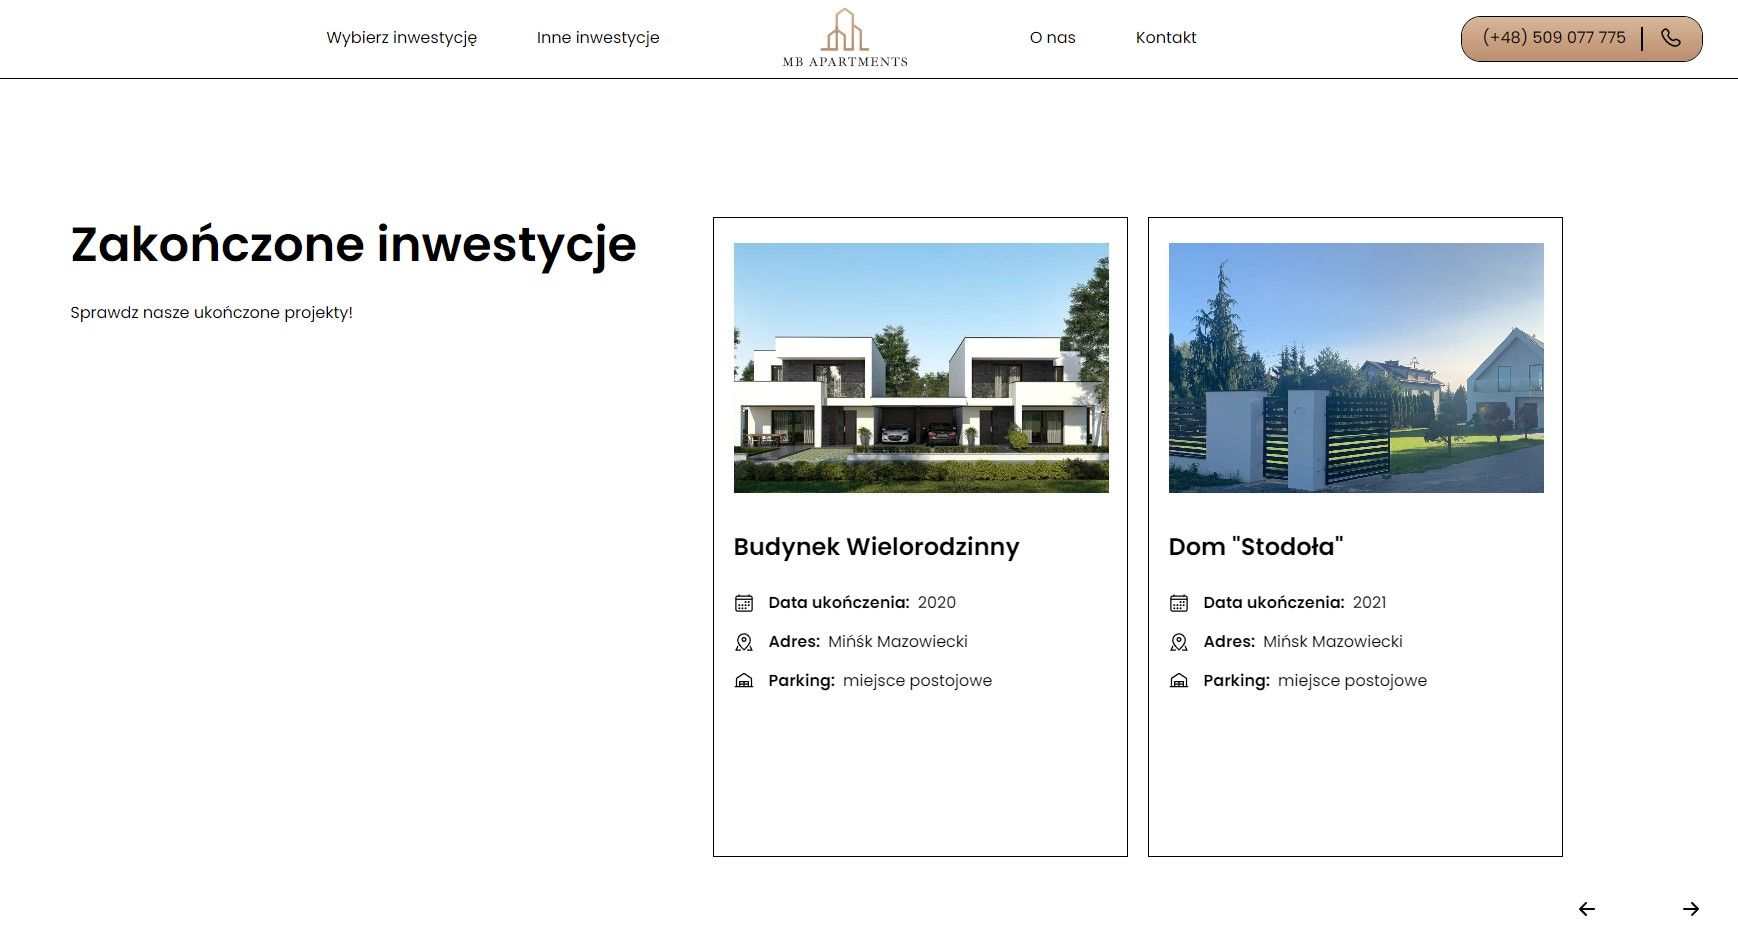 mb-apartments-website-screenshot.jpg